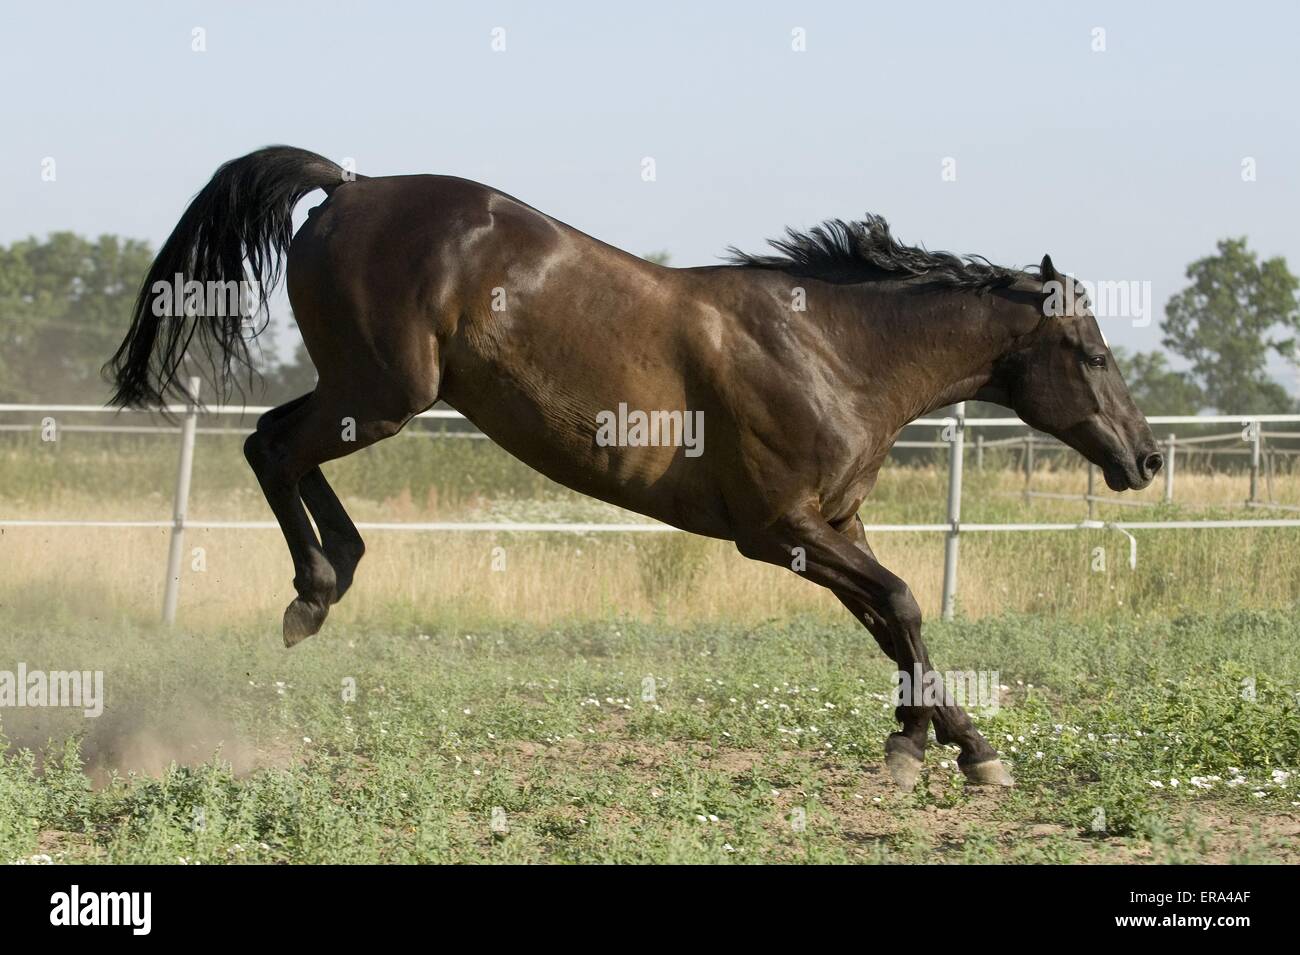 bucking-horse-ERA4AF.jpg